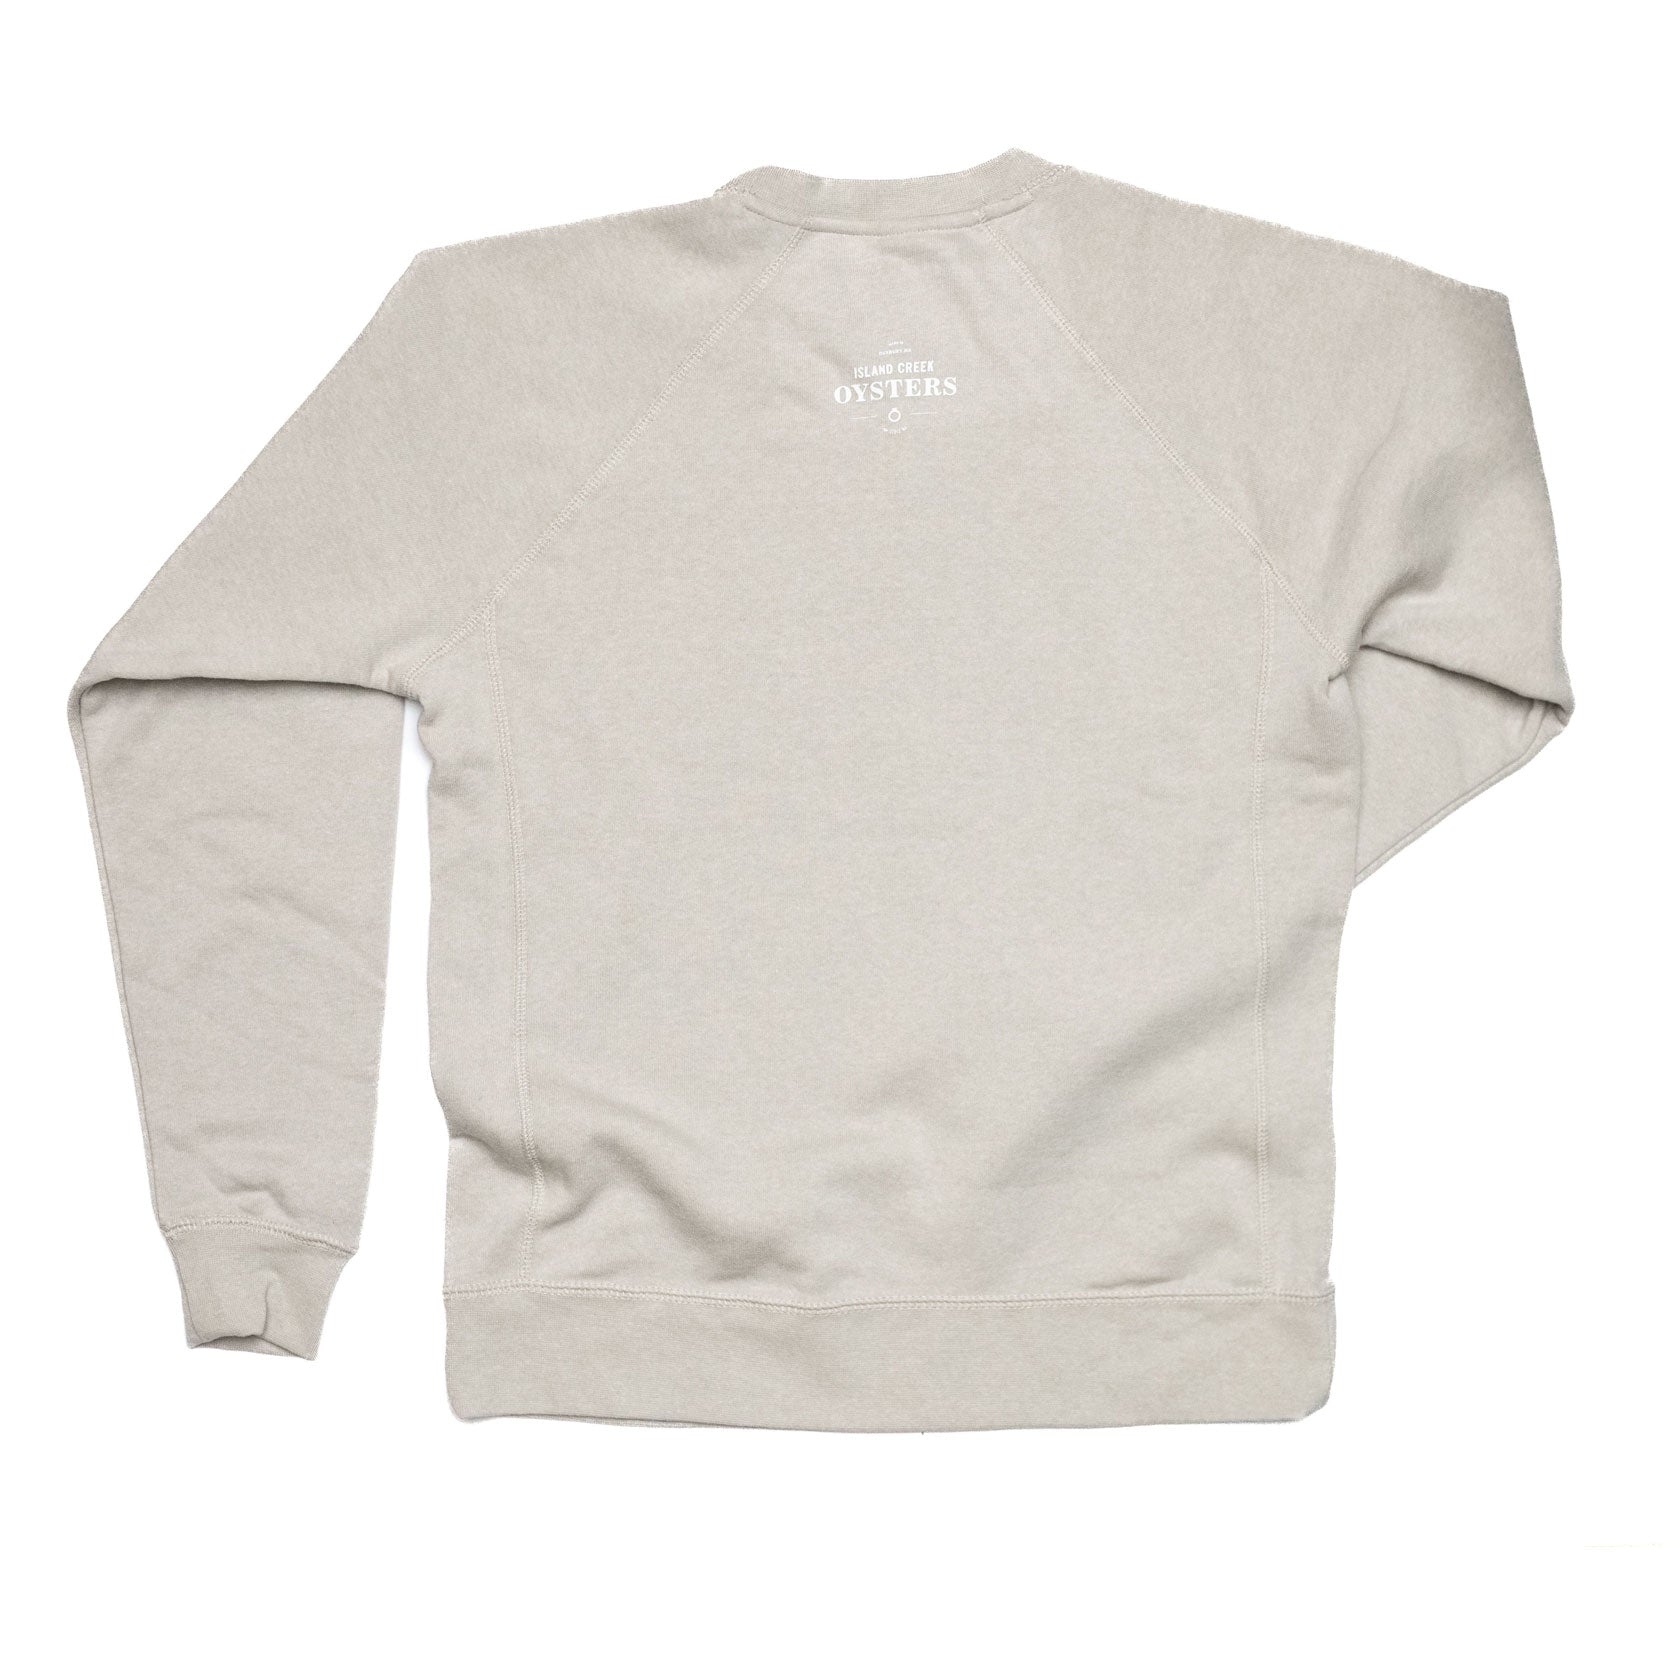 Oysters Stone/White Crewneck Sweatshirt